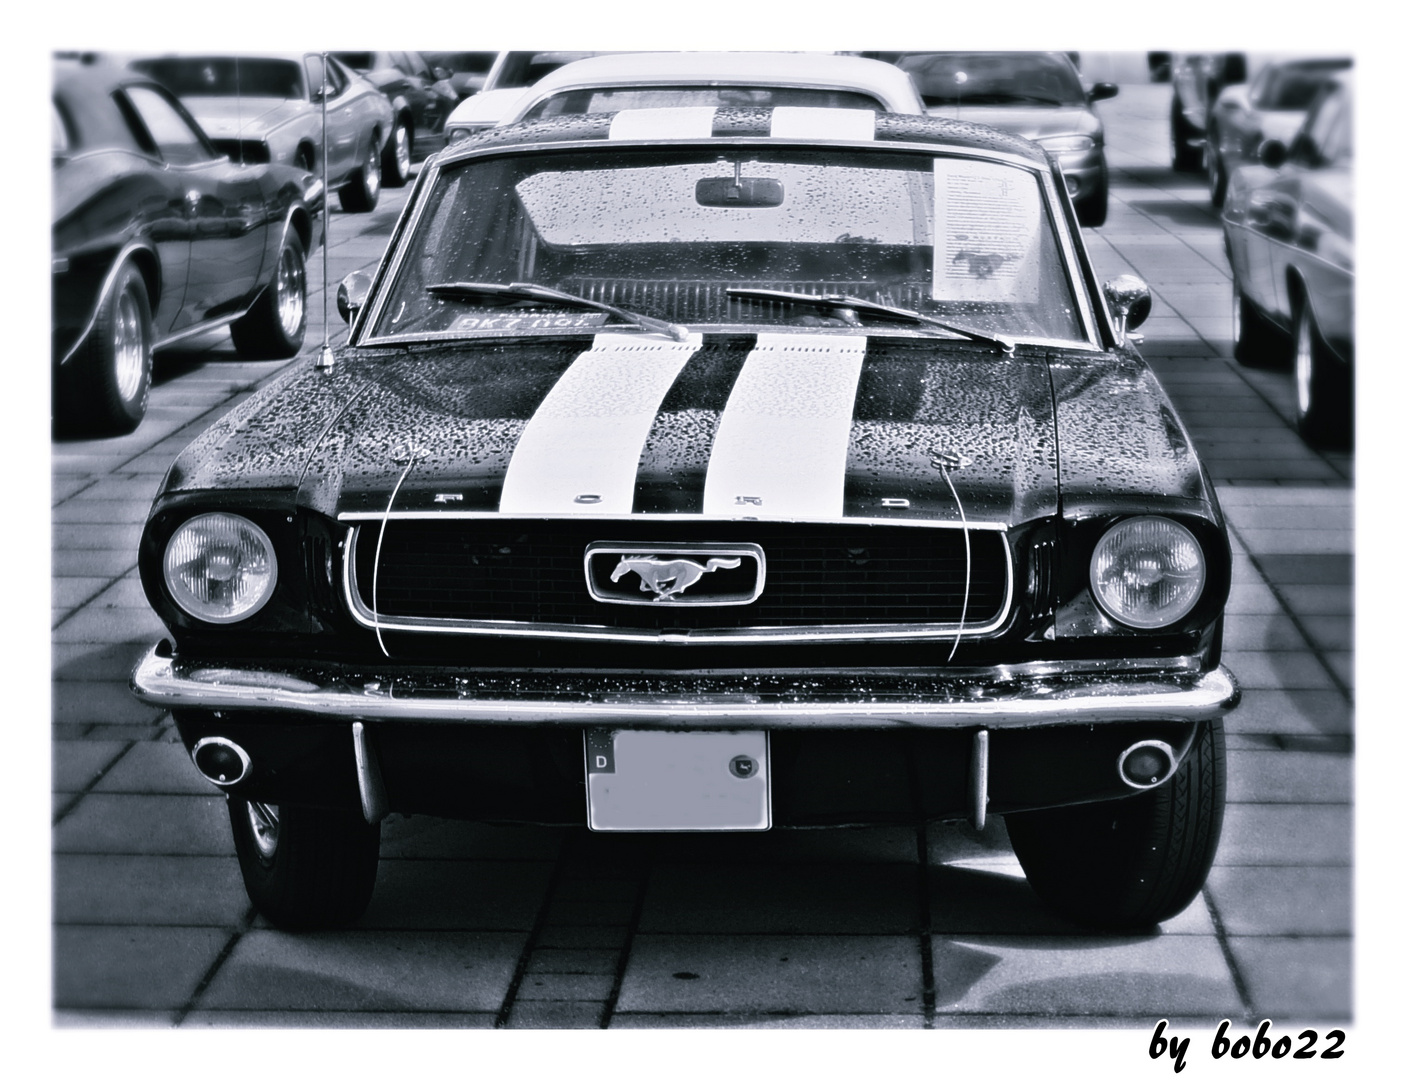 good old Mustang